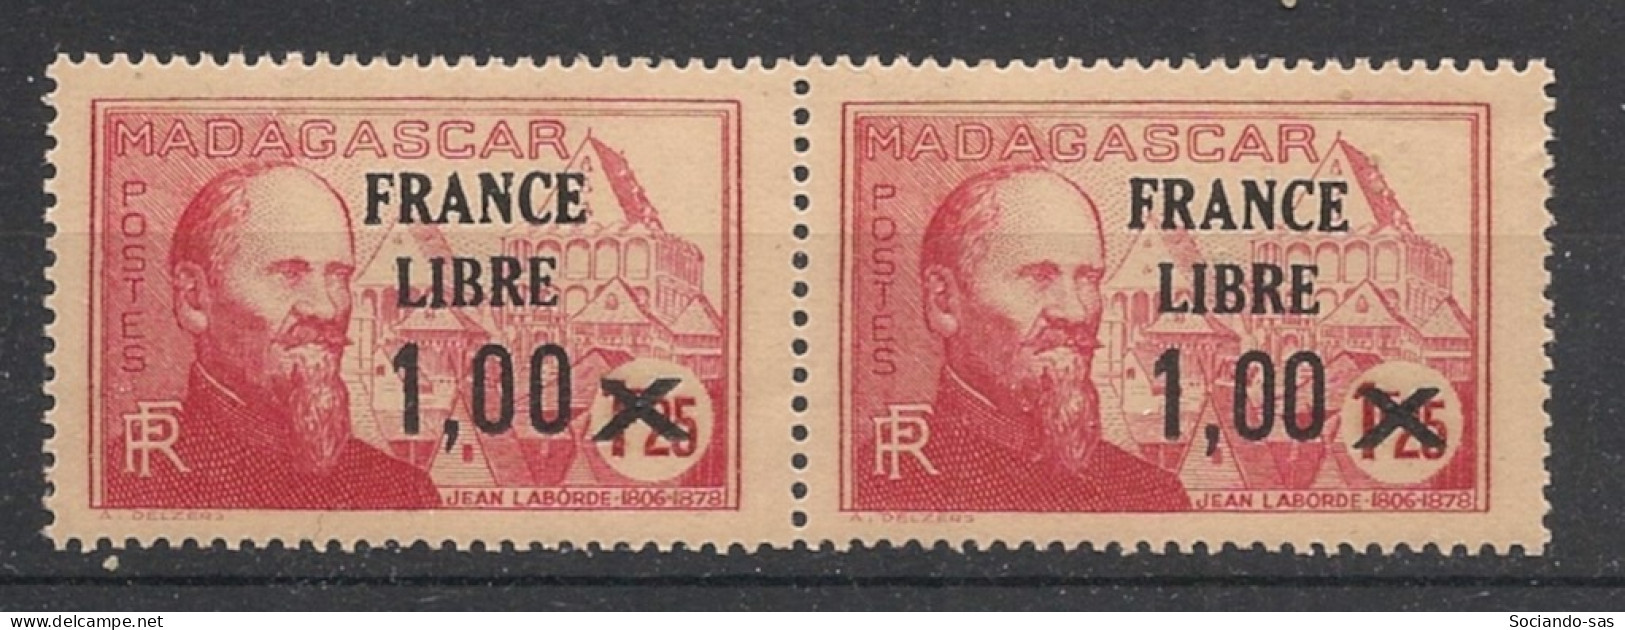 MADAGASCAR - 1942 - N°YT. 260b - France Libre 1,00 Sur 1f25 - VARIETE Surcharge Espacée T.a.n. - Neuf Luxe ** / MNH - Nuevos